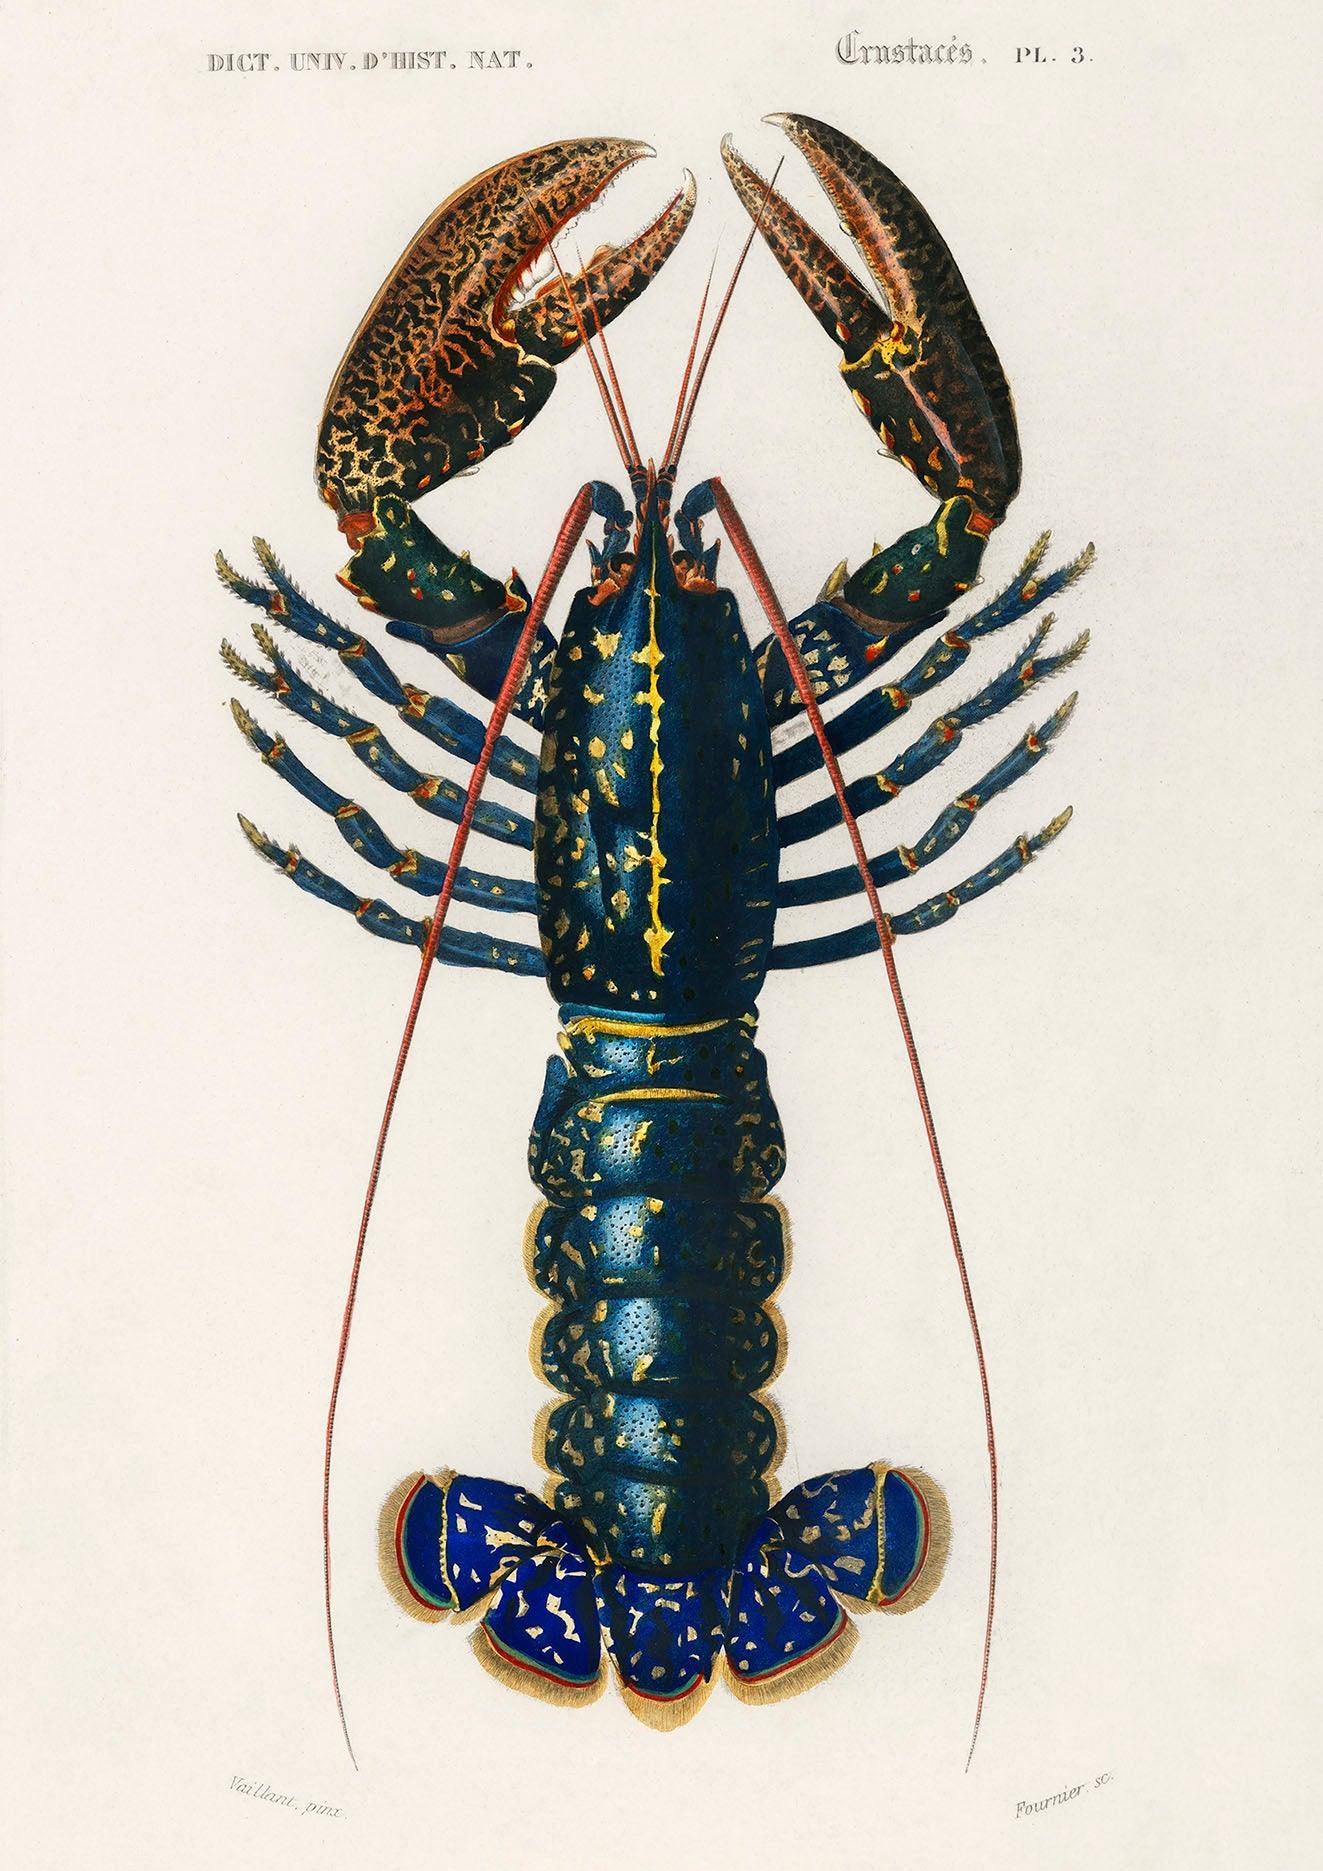 CRAWFISH PRINT: Vintage Lobster Illustration - Pimlico Prints